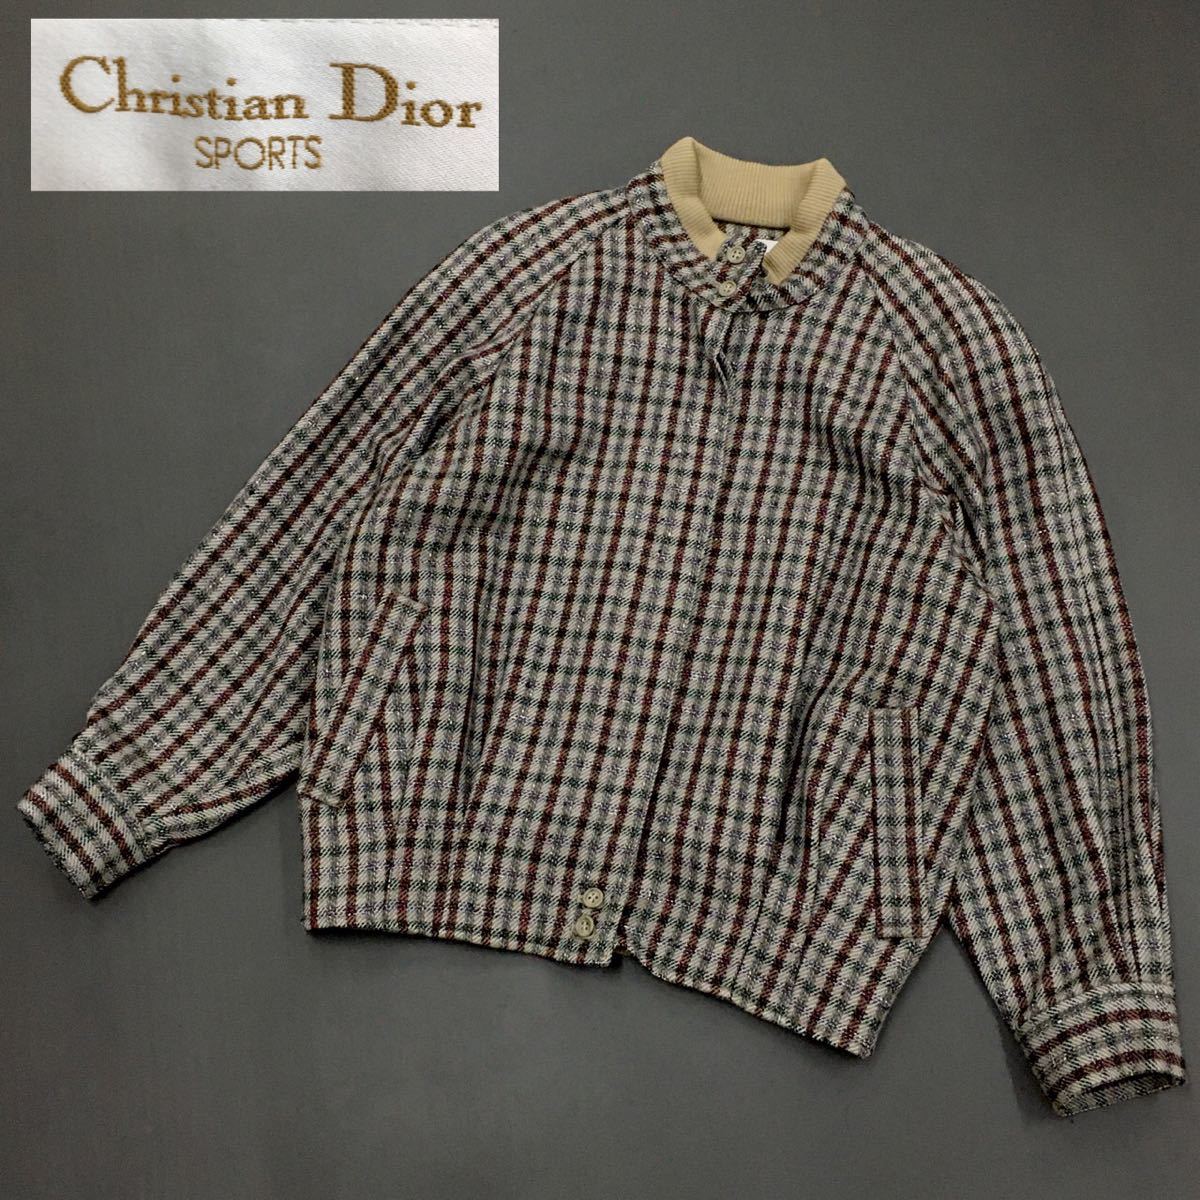 Christian Dior SPORTS クリスチャンディオール スポーツ スタンドカラー ブルゾン チェックジャケット ウール メンズ サイズM